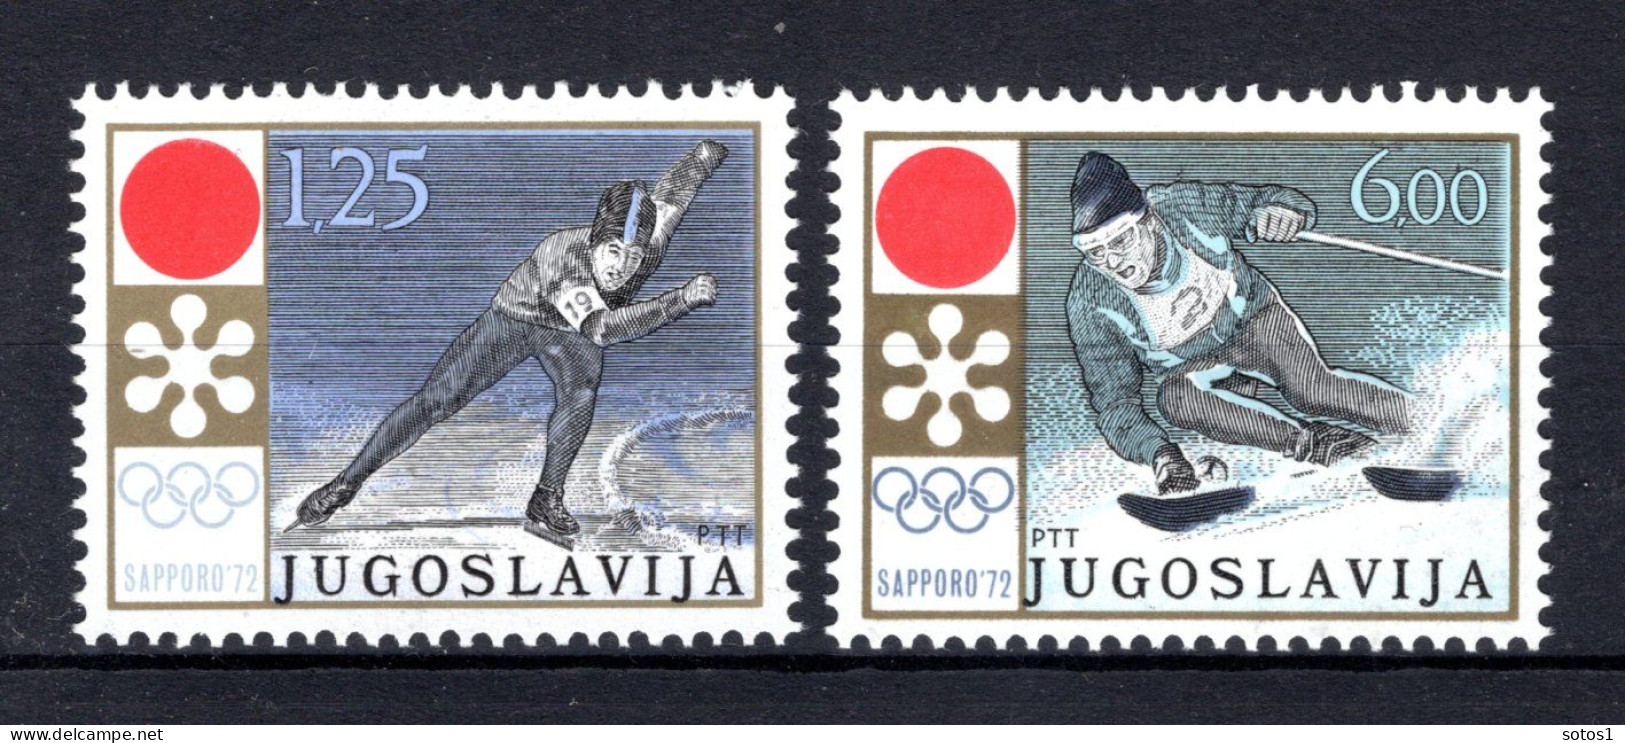 JOEGOSLAVIE Yt. 1331/1332 MNH 1972 - Unused Stamps